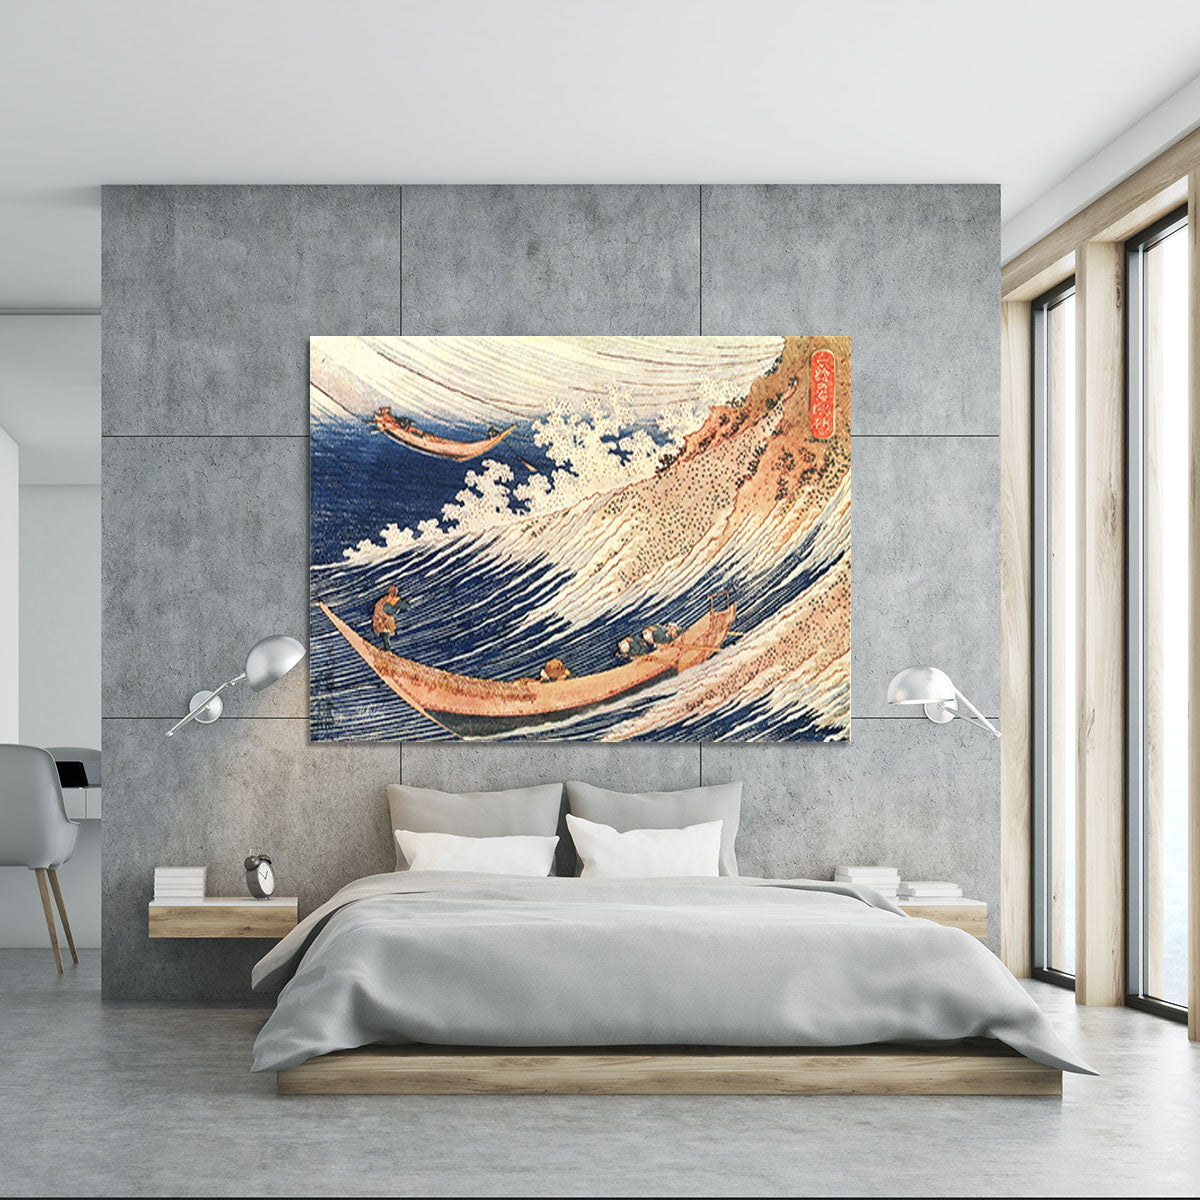 A Wild Sea at Choshi by Hokusai Canvas Print or Poster - Canvas Art Rocks - 5